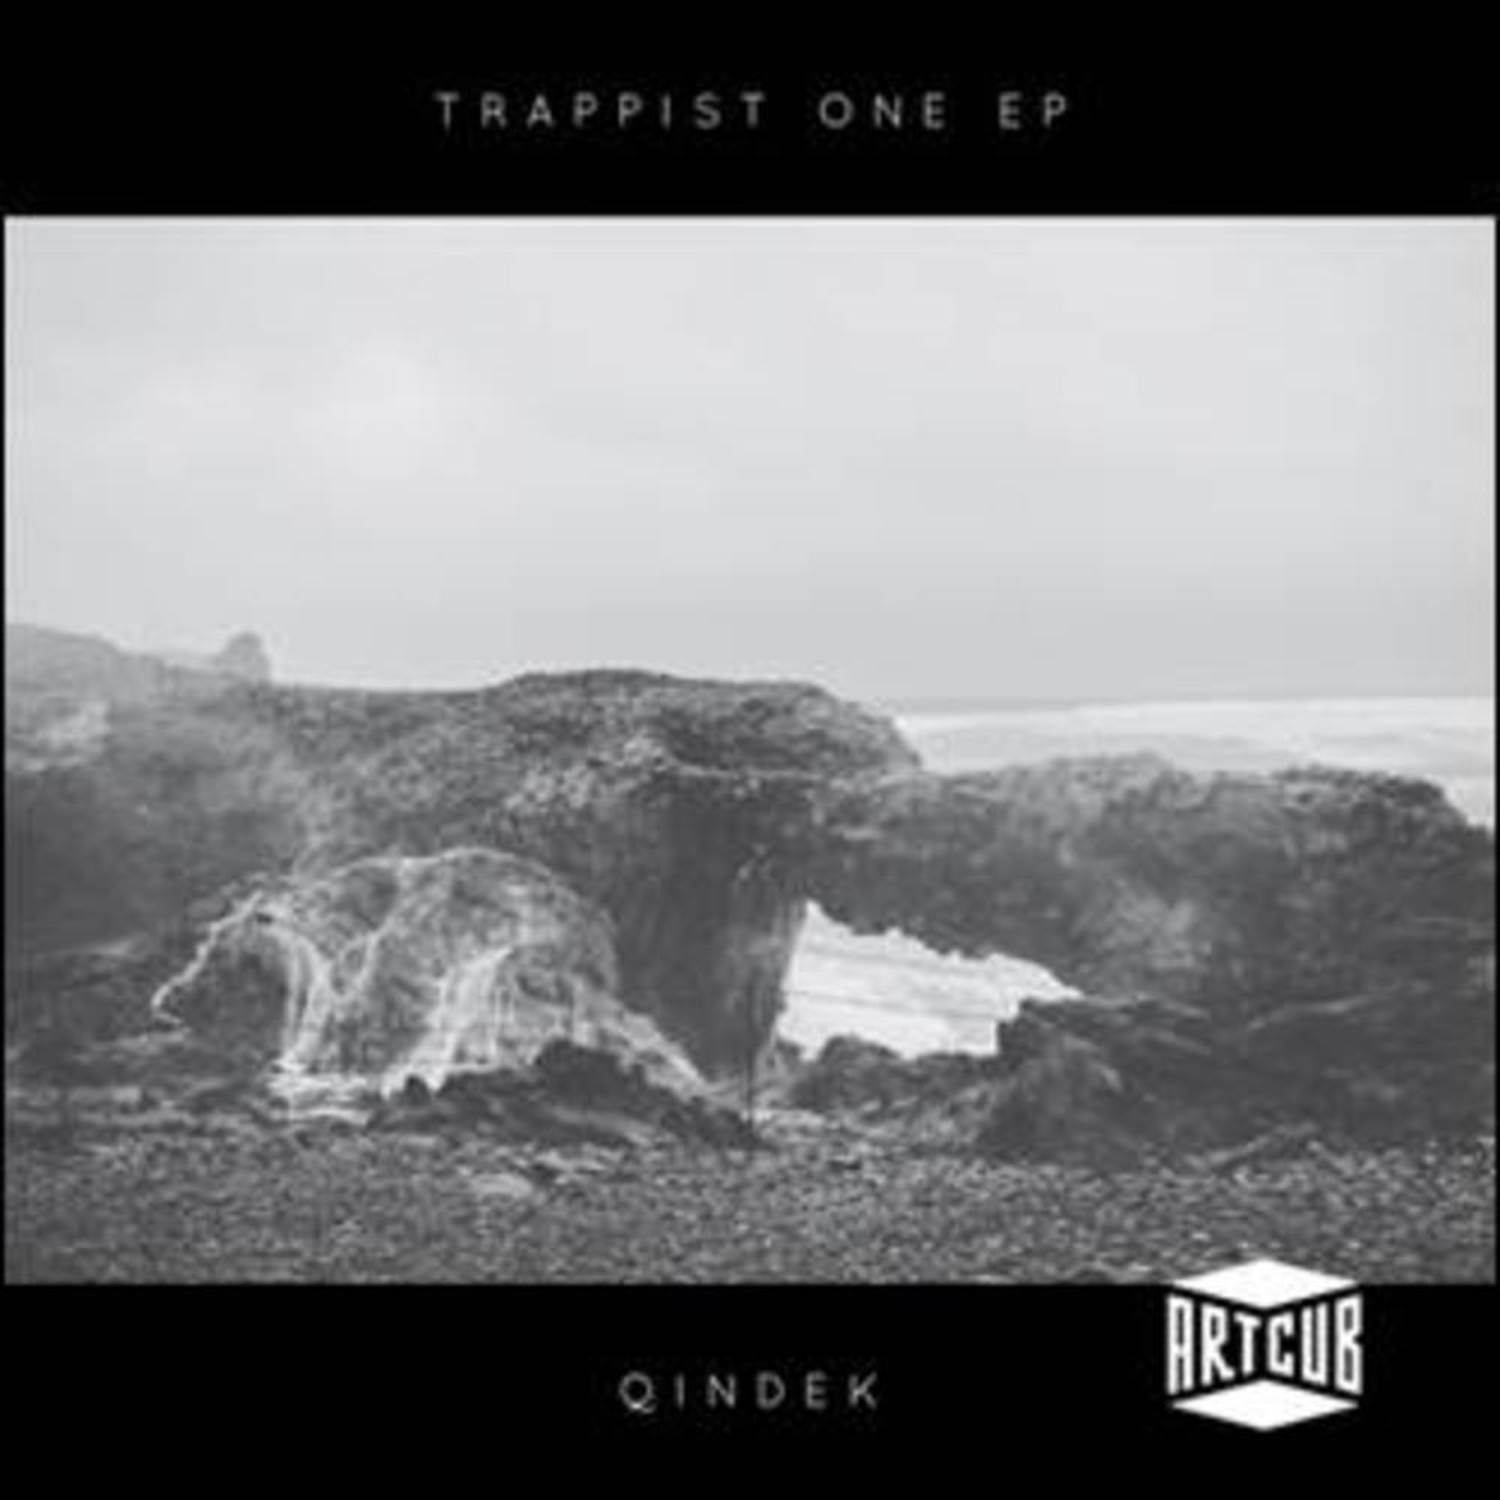 Qindek - TRAPPIST ONE EP